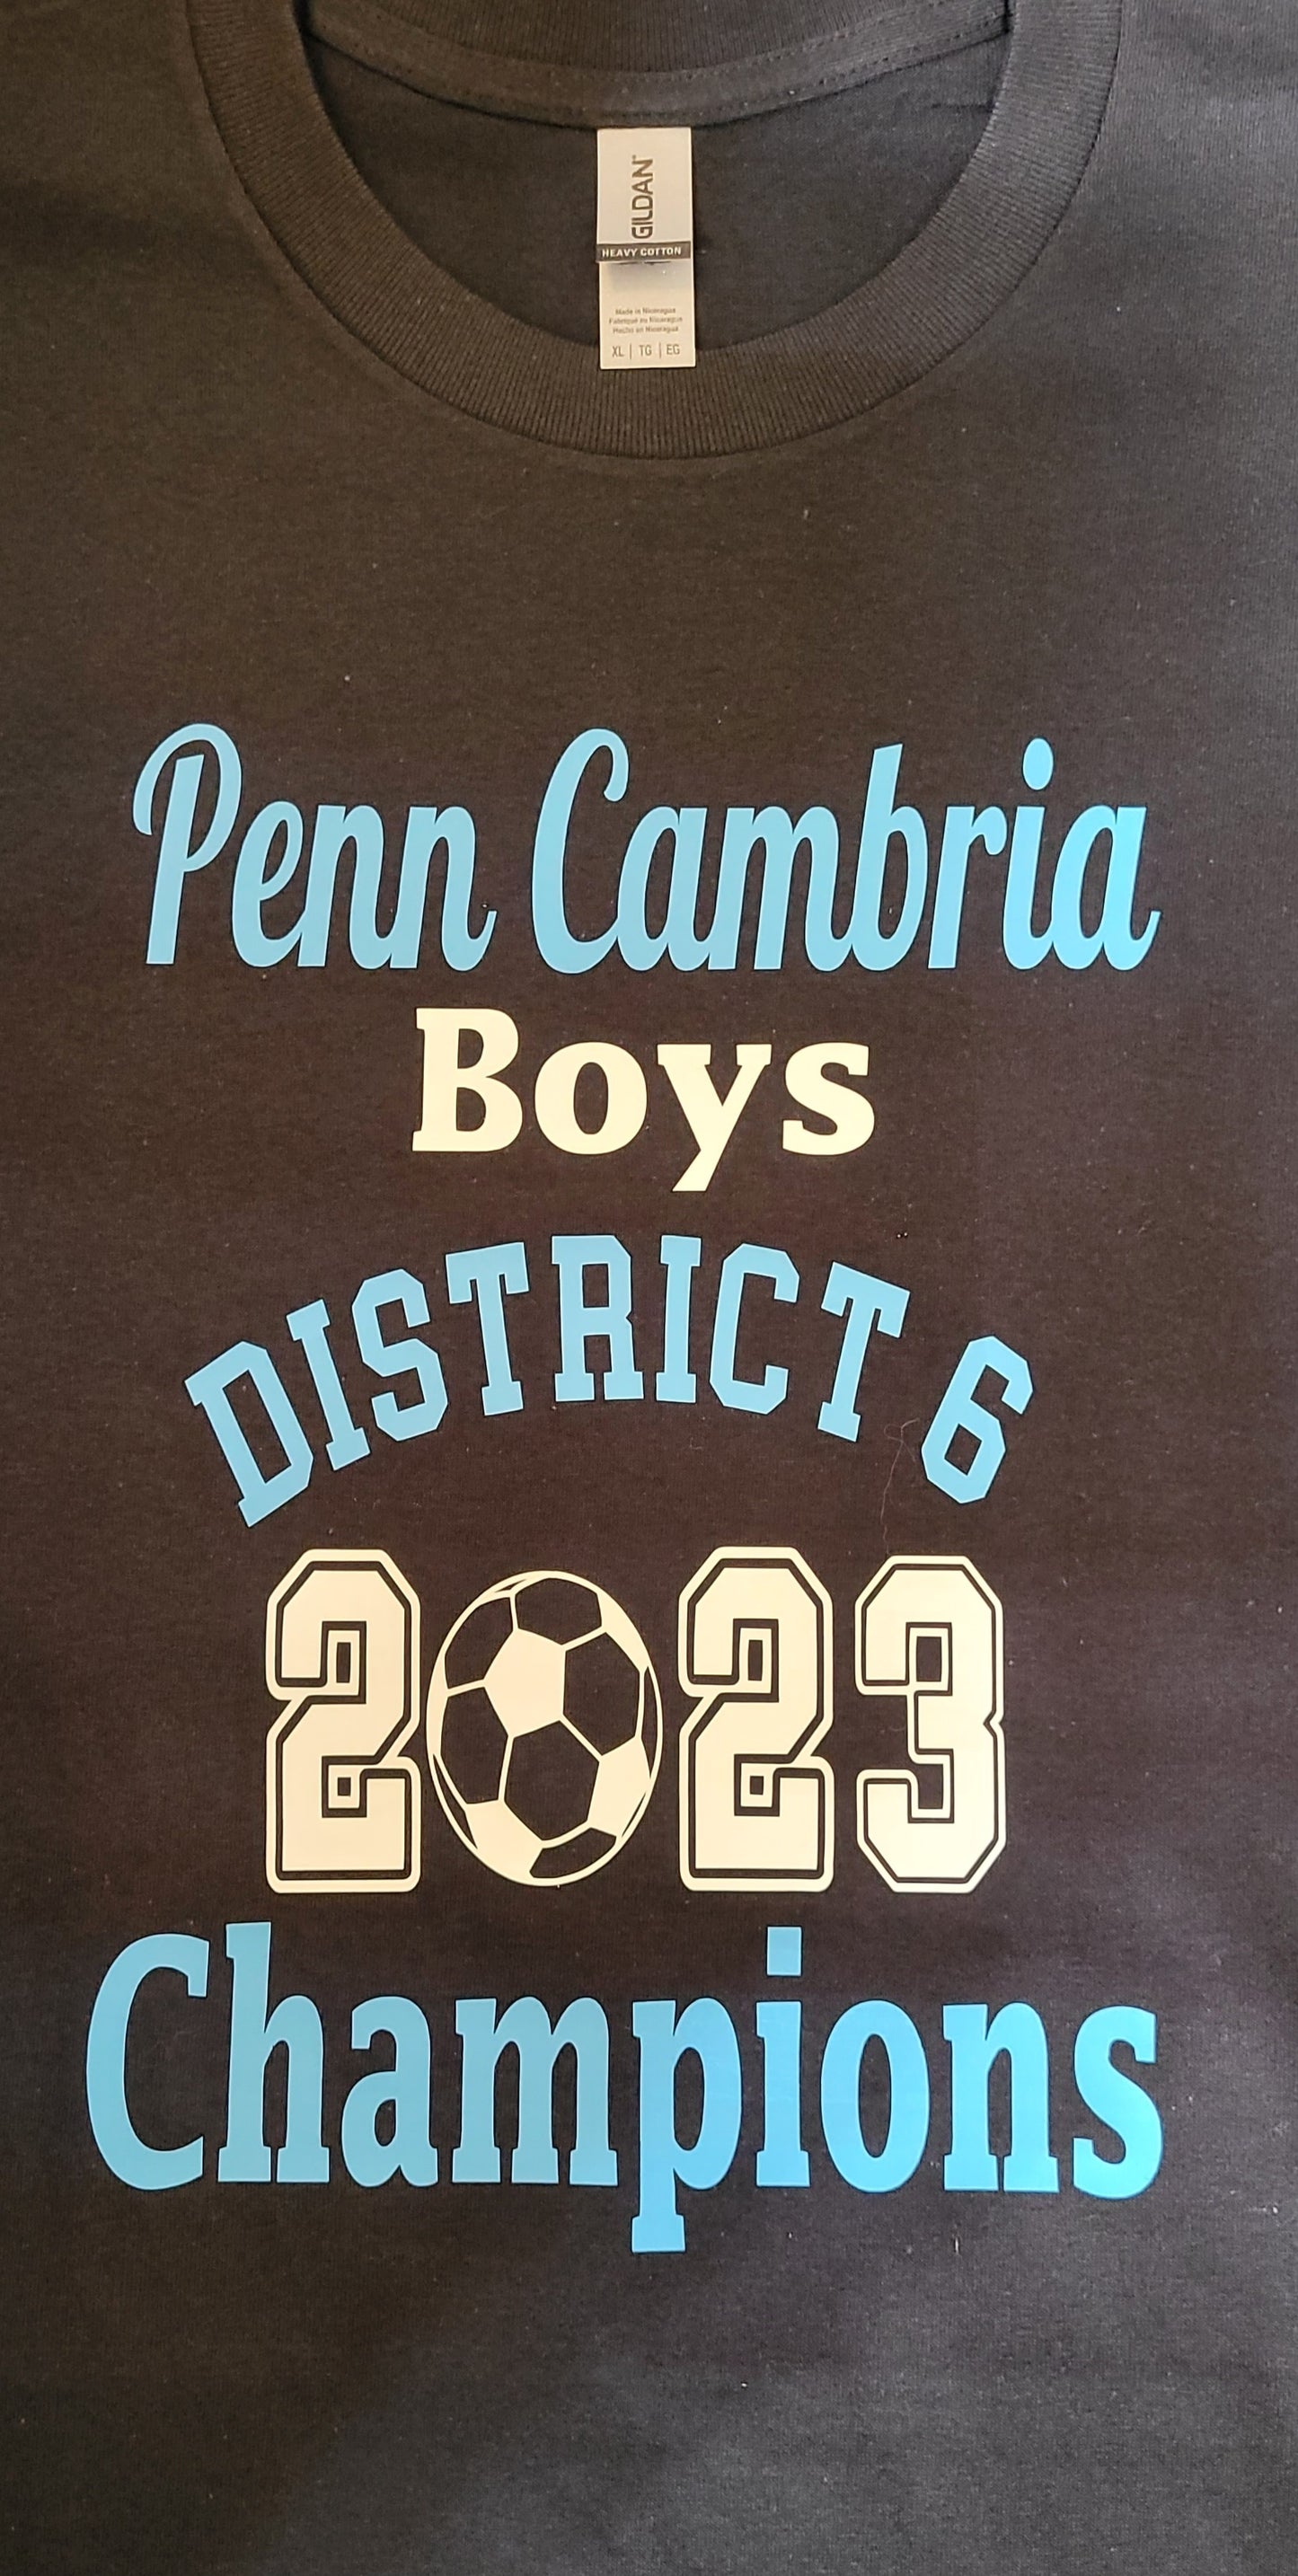 Penn Cambria Boys Soccer District 6 Champions Apparel